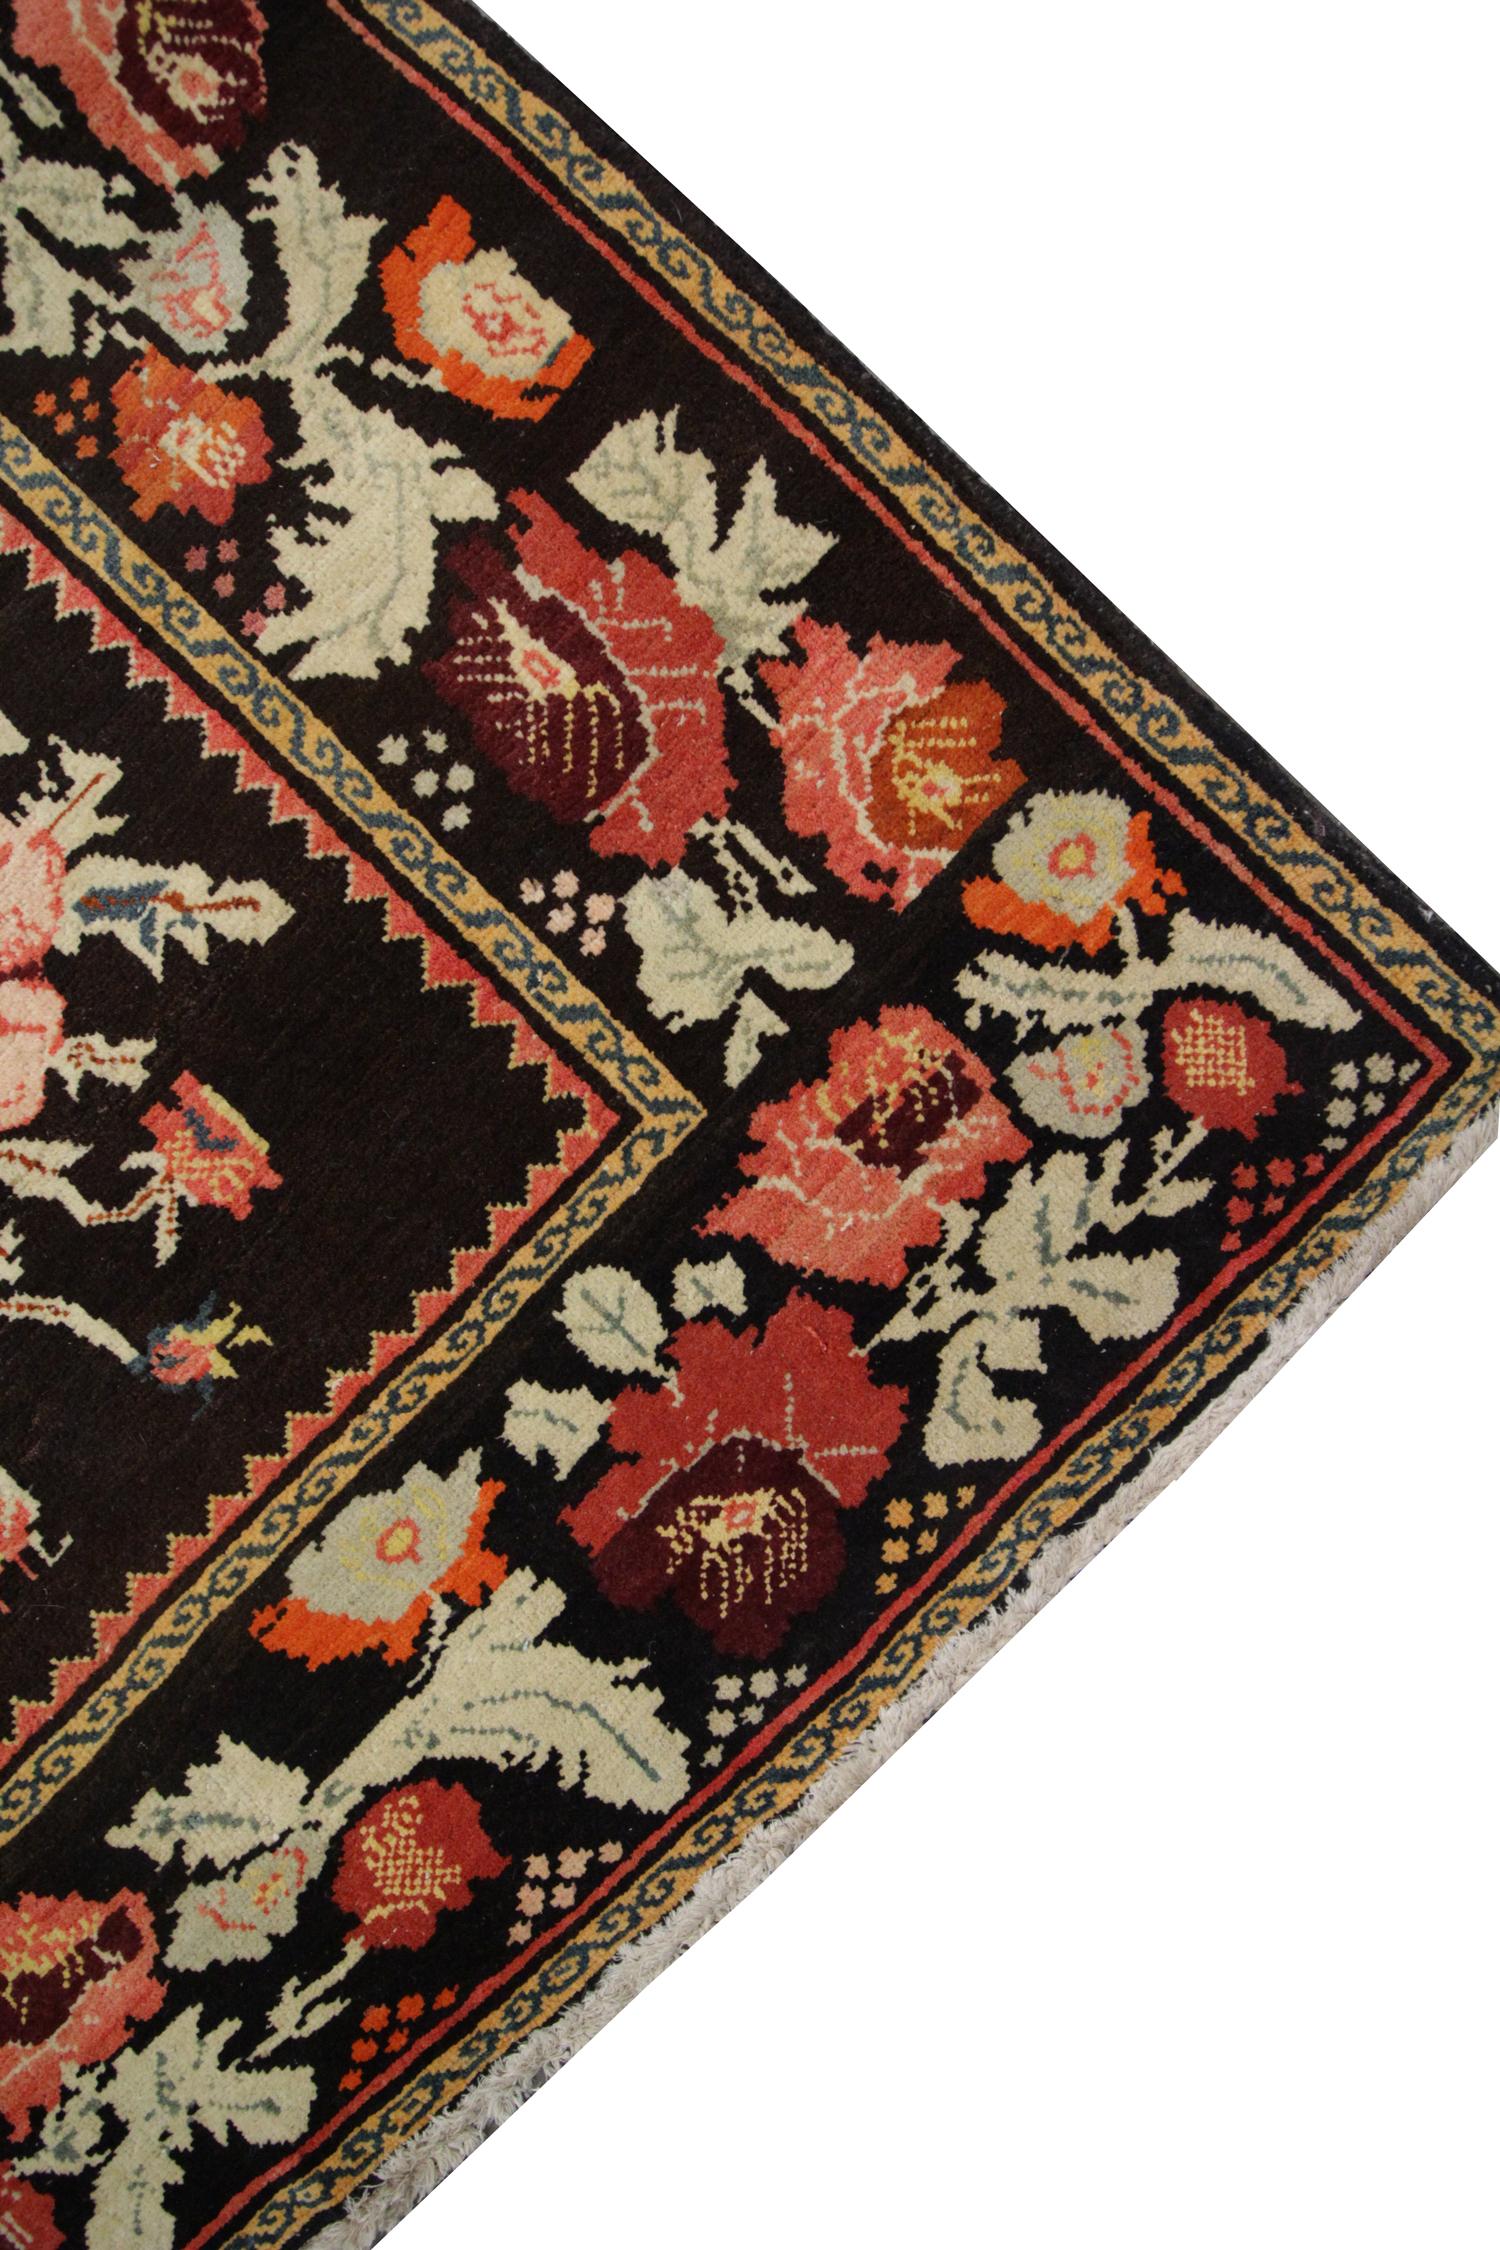 handmade area rugs